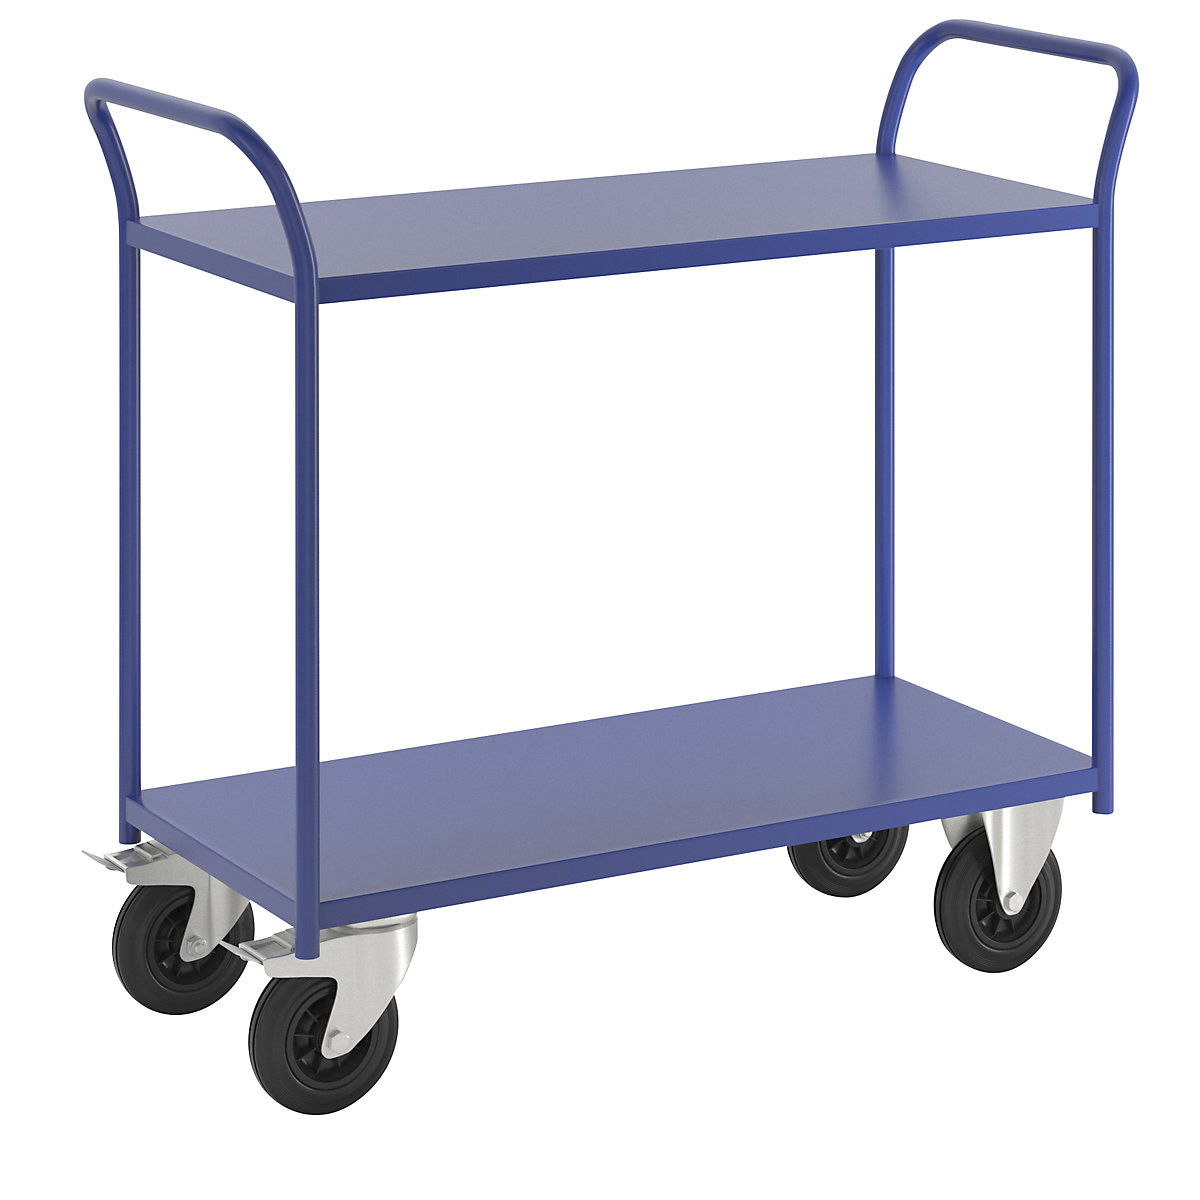 KM41 table trolley – Kongamek, 2 shelves, LxWxH 1080 x 450 x 975 mm, blue, 2 swivel castors with stops, 2 fixed castors-6